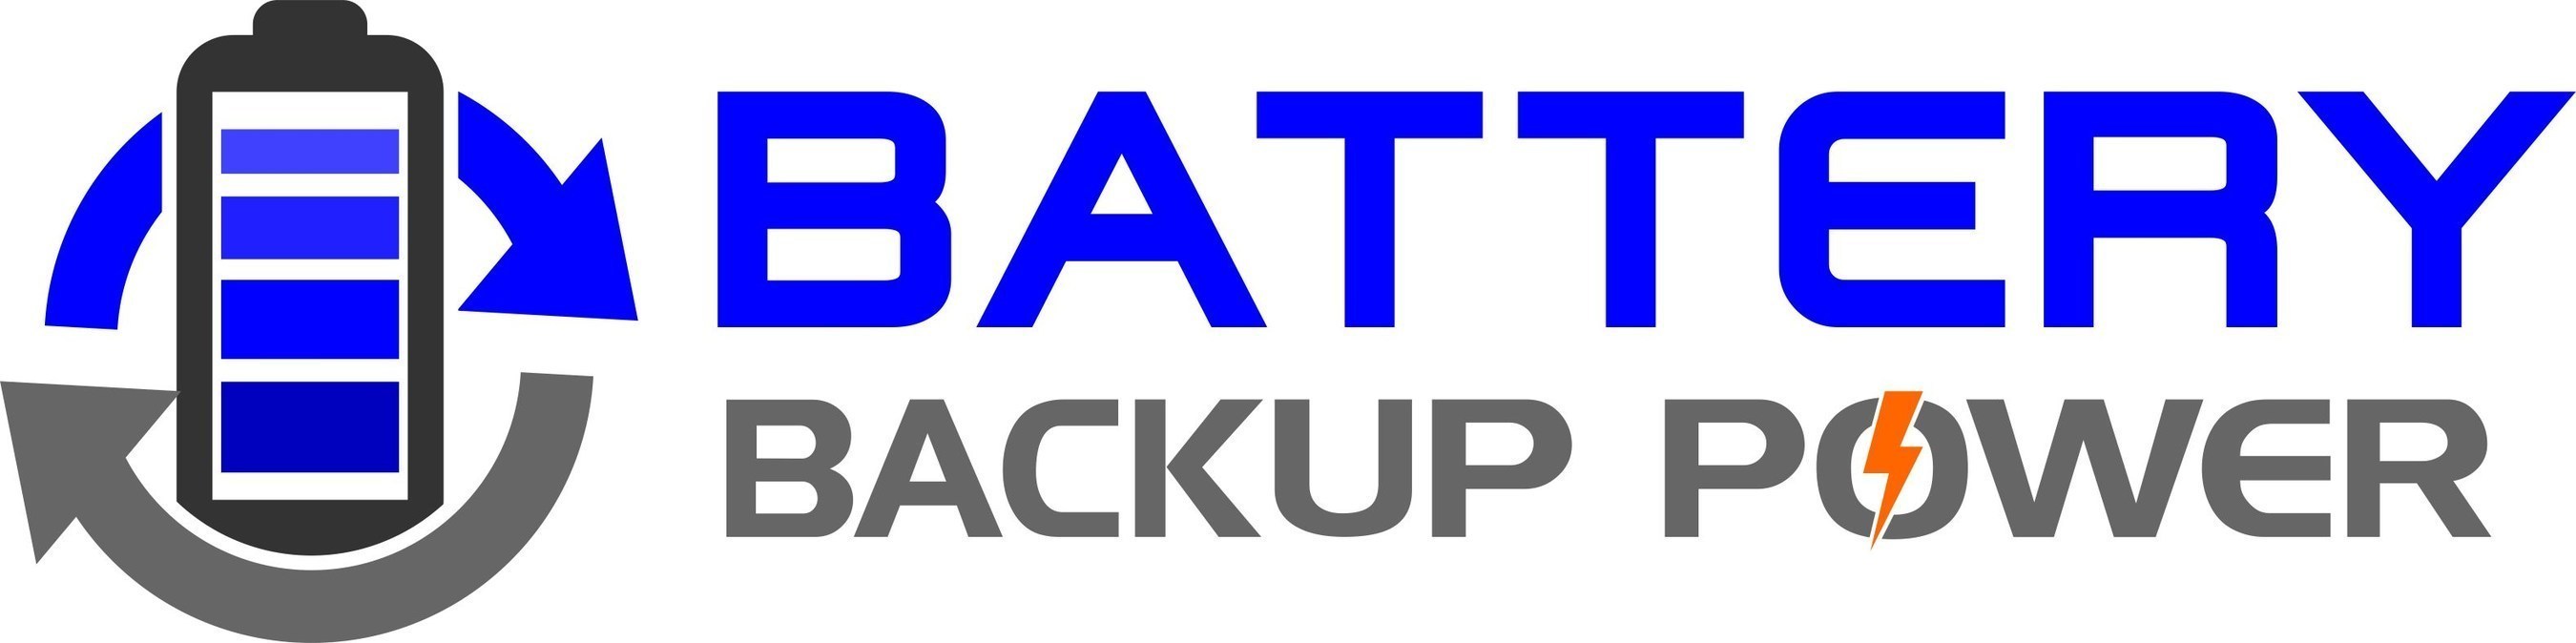 Battery Backup Power, Inc. logo